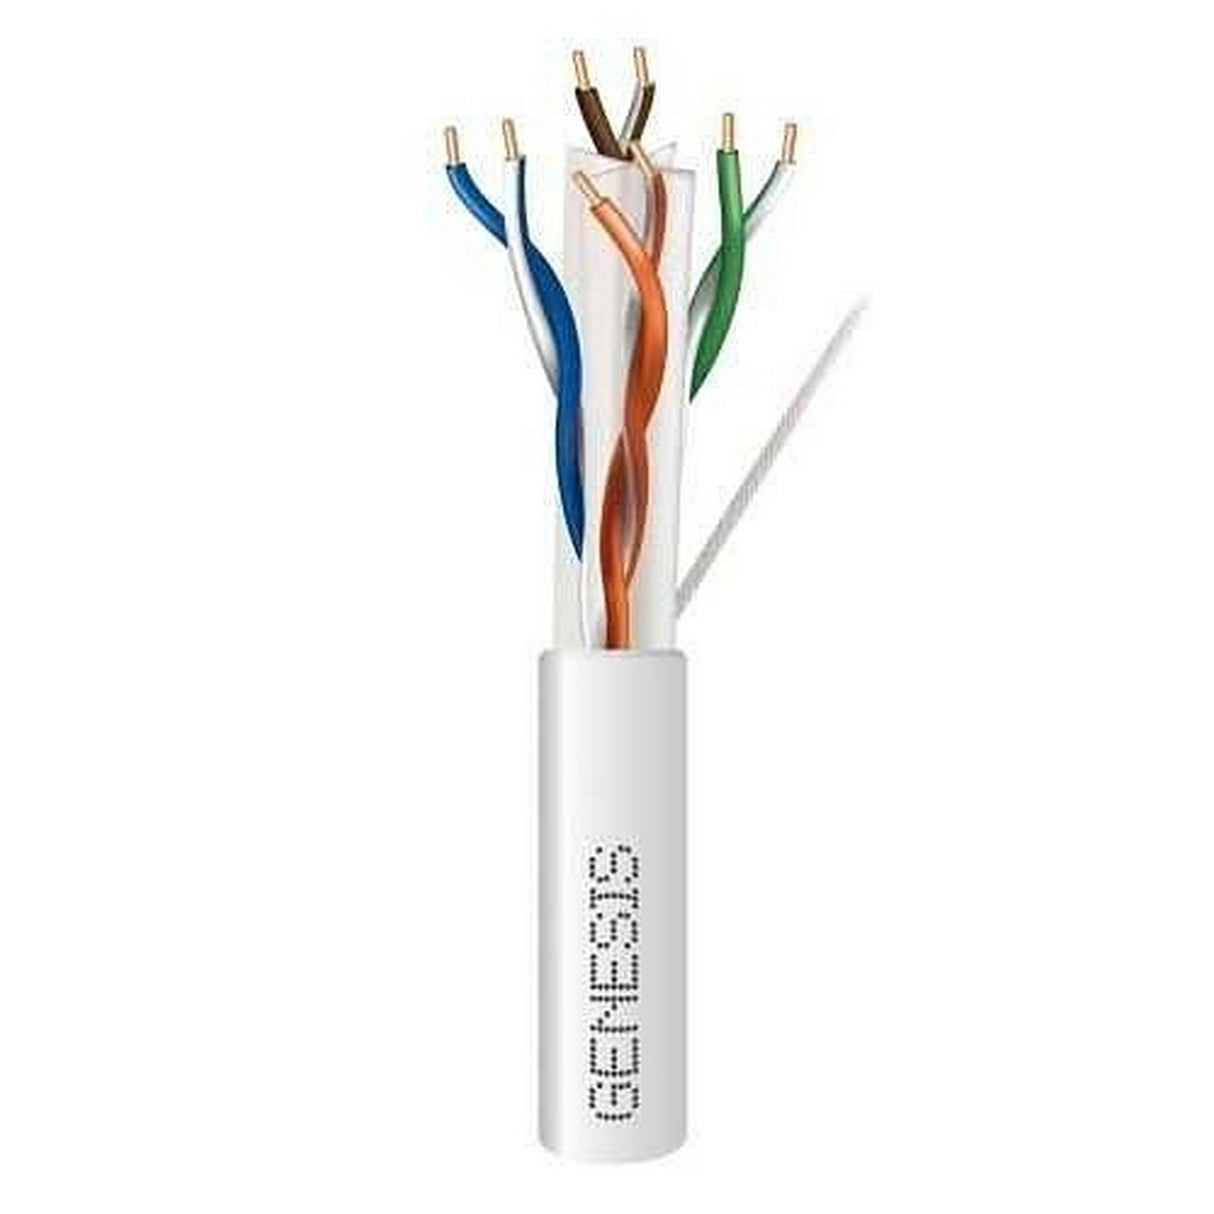 Genesis 50921101 Cat 6 Plus Riser Cable, 1000-Feet Pull Box, White